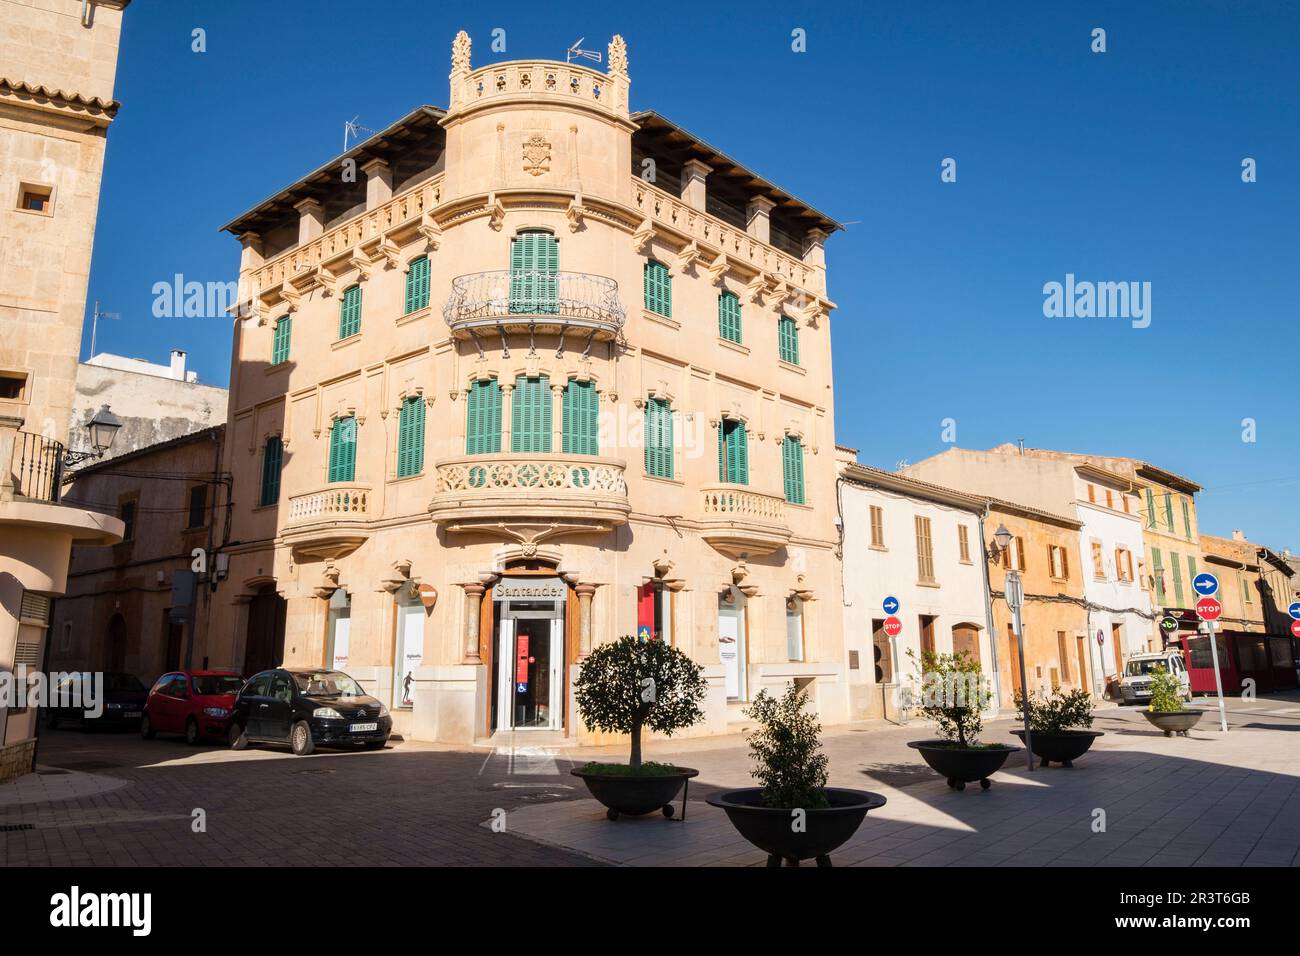 Cas Sant, Campos, Mallorca, balearic islands, Spain. Stock Photo